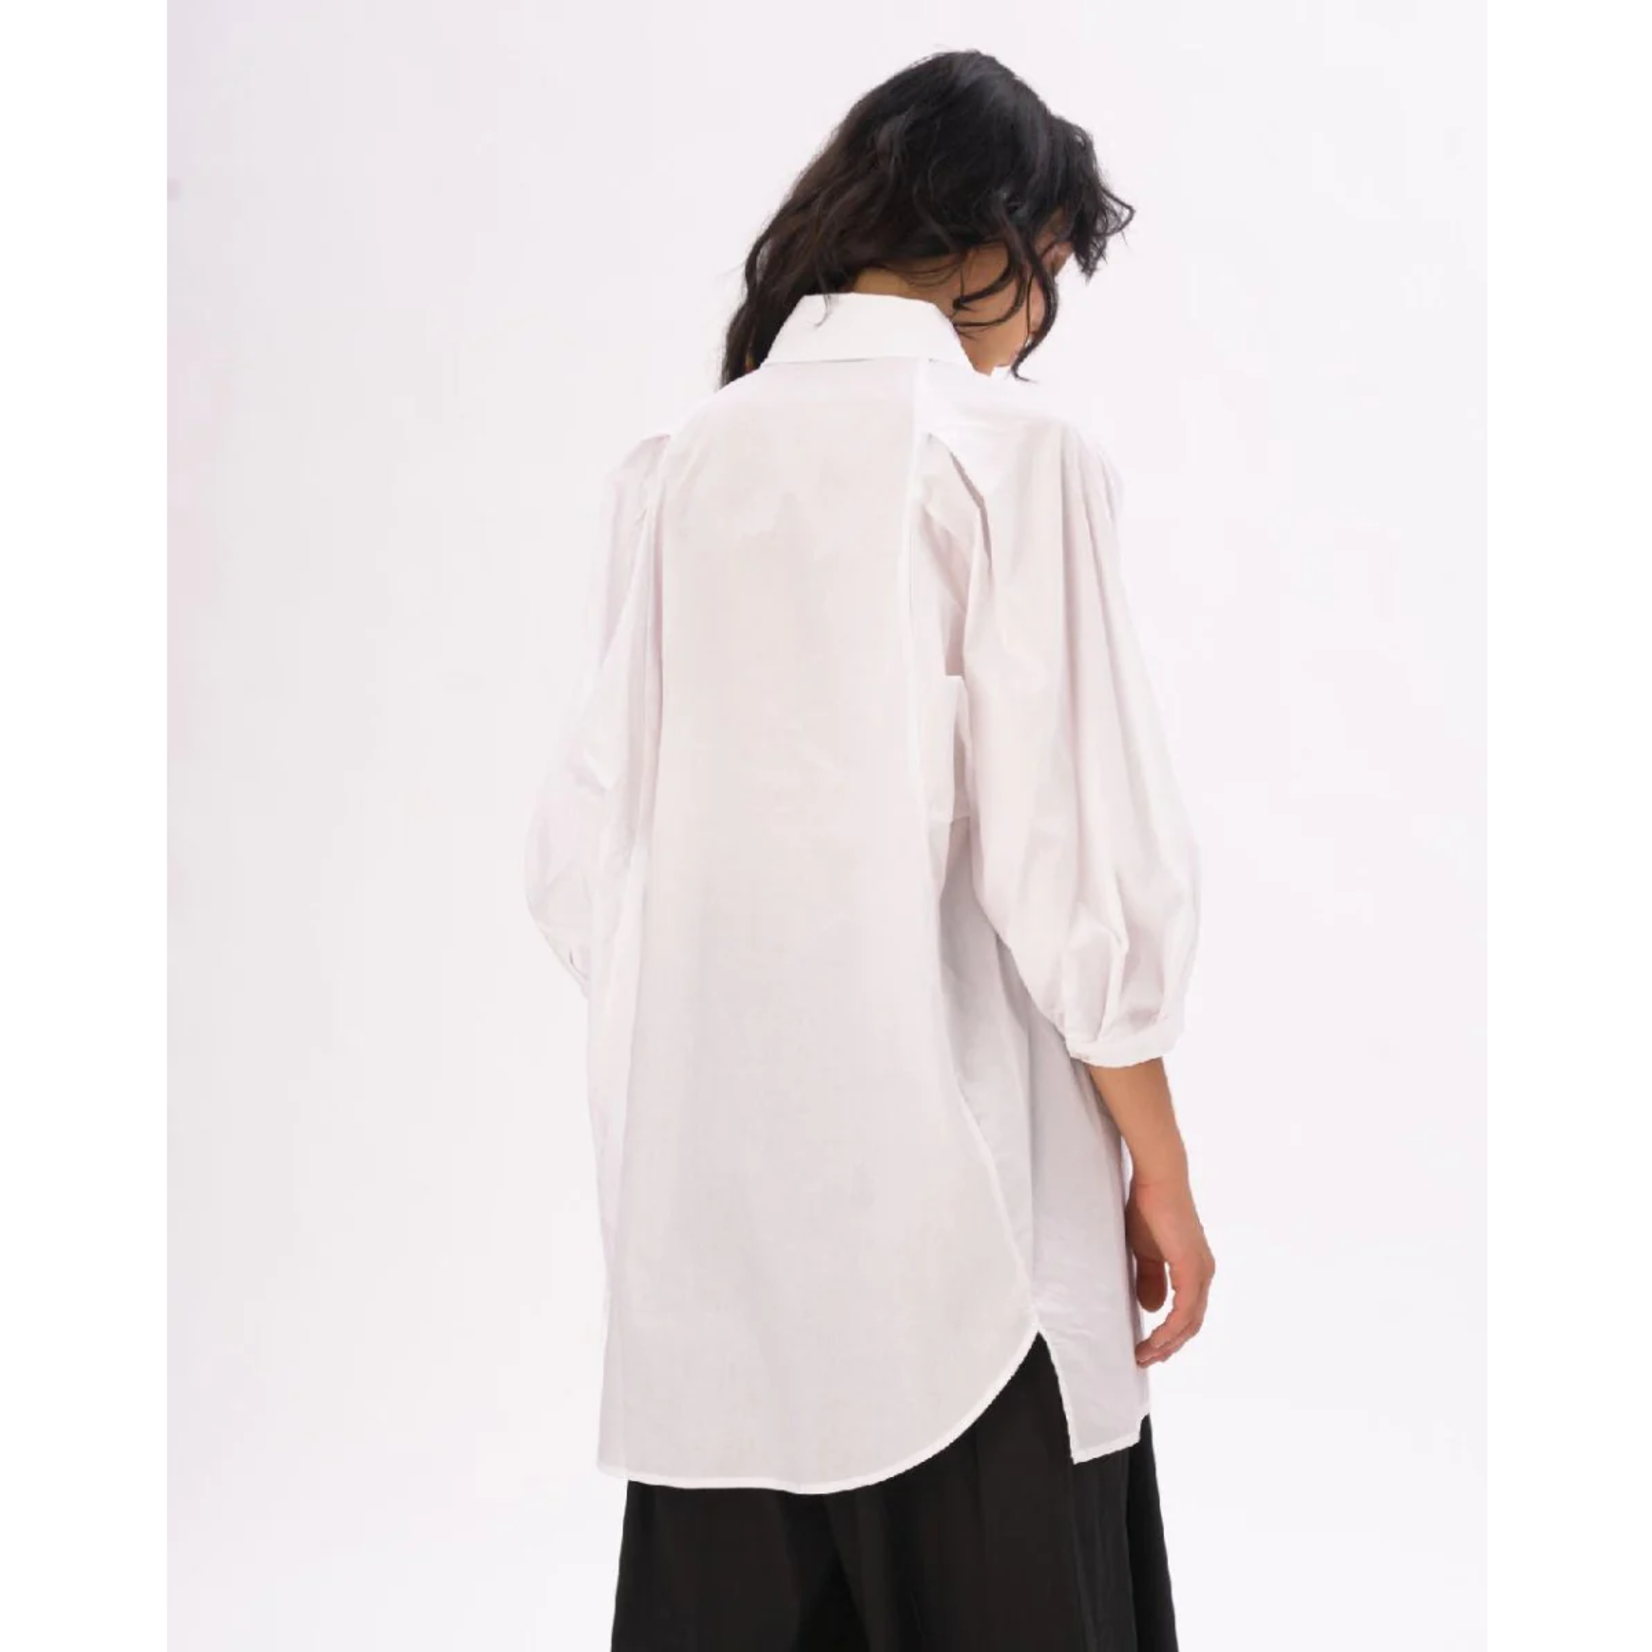 Baci Drop Slv Organic Cotton Shirtdress in White